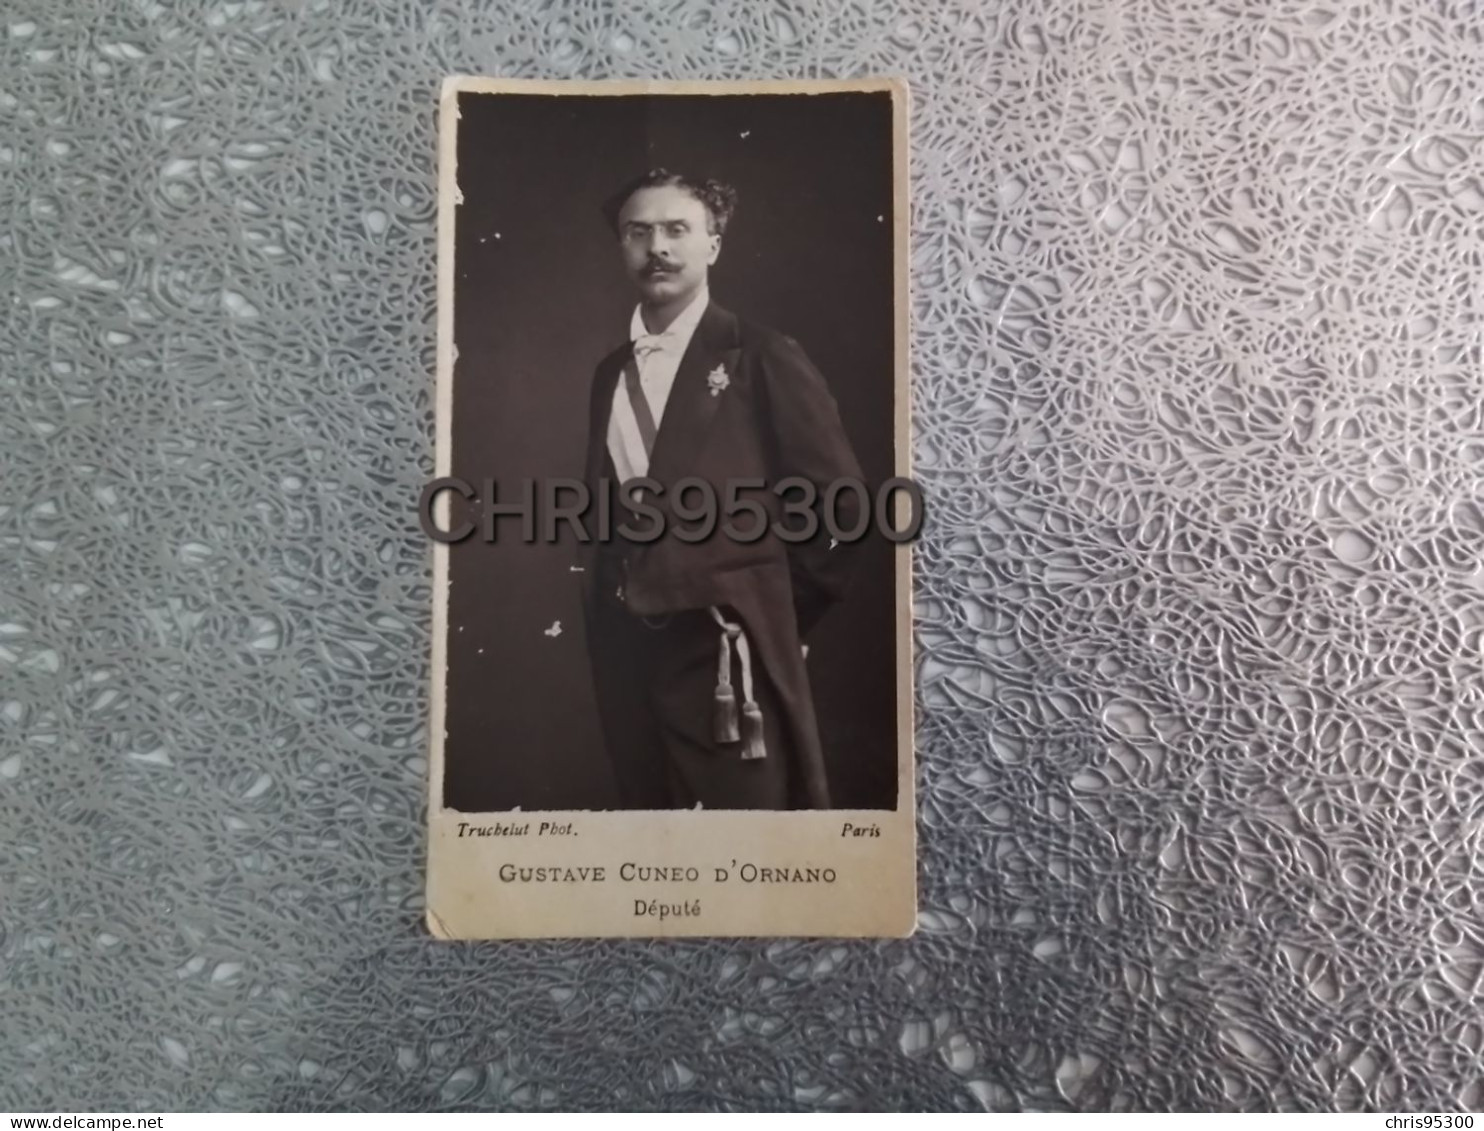 PHOTO CDV 19 EME SIECLE - GUSTAVE CUNEO D’ORNANO DEPUTE CHARENTE HOMME POLITIQUE BONAPARTISTE - MEDAILLE - PARIS - Old (before 1900)